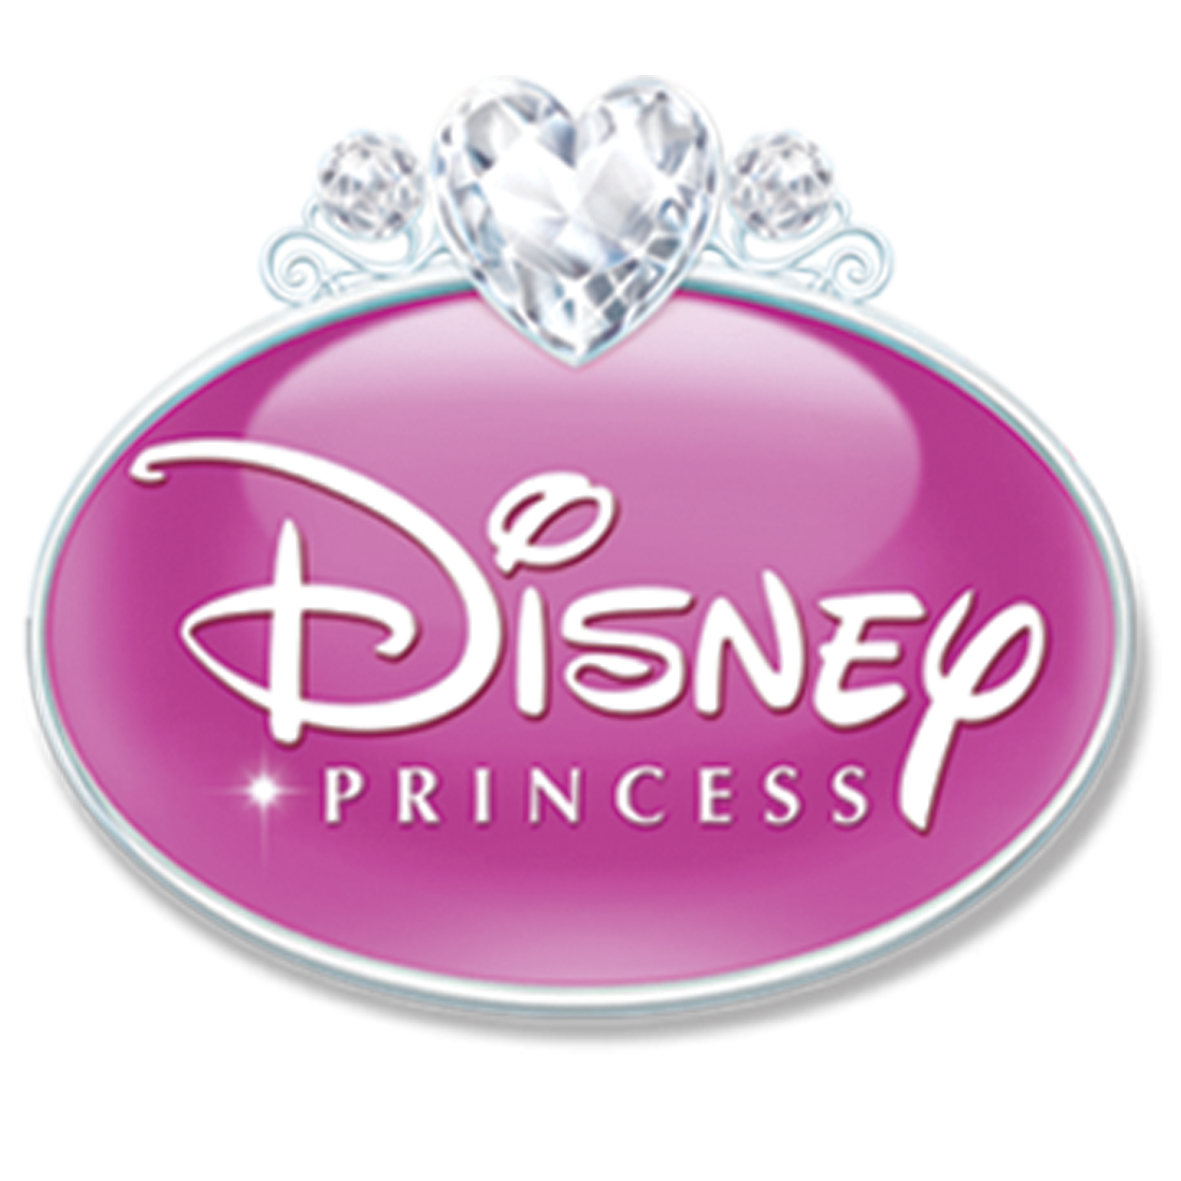  Disney Princess 7 Piece Play Set - Snow White, Cinderella,  Aurora, Ariel, Jasmine, Tiana, Merida (2013 Edition) : Toys & Games